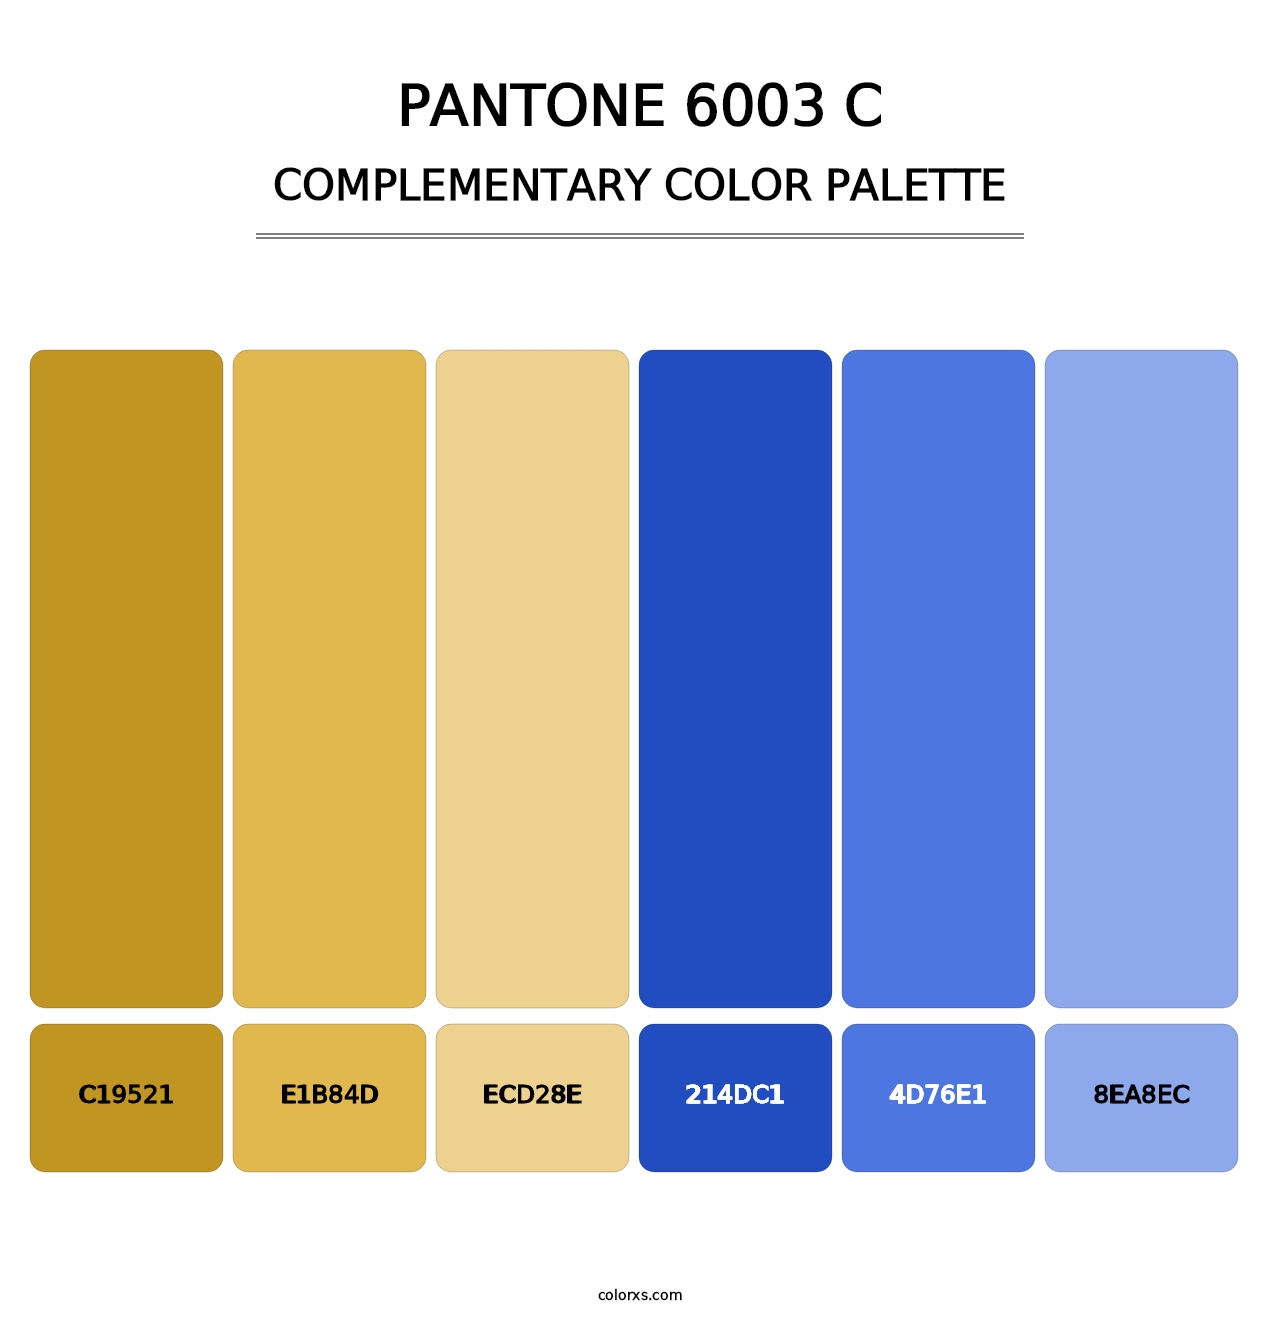 PANTONE 6003 C - Complementary Color Palette